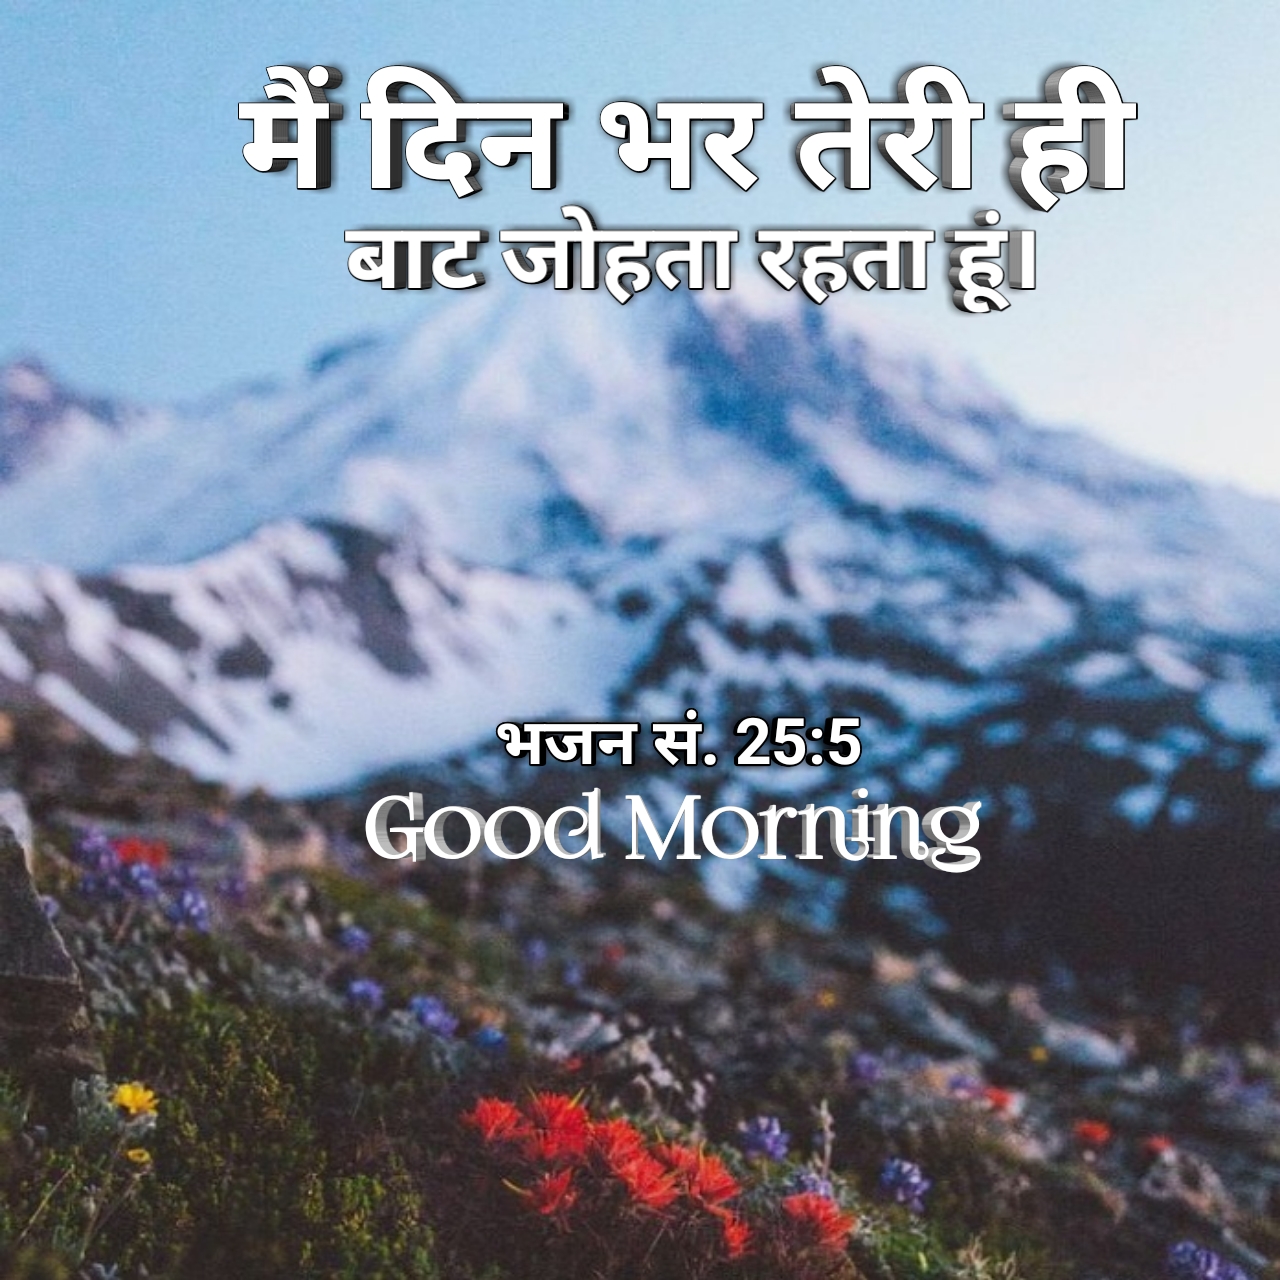 हिन्दी बाइबल वर्सेज इमेजेस | Good Morning Images with Bible Verses in Hindi